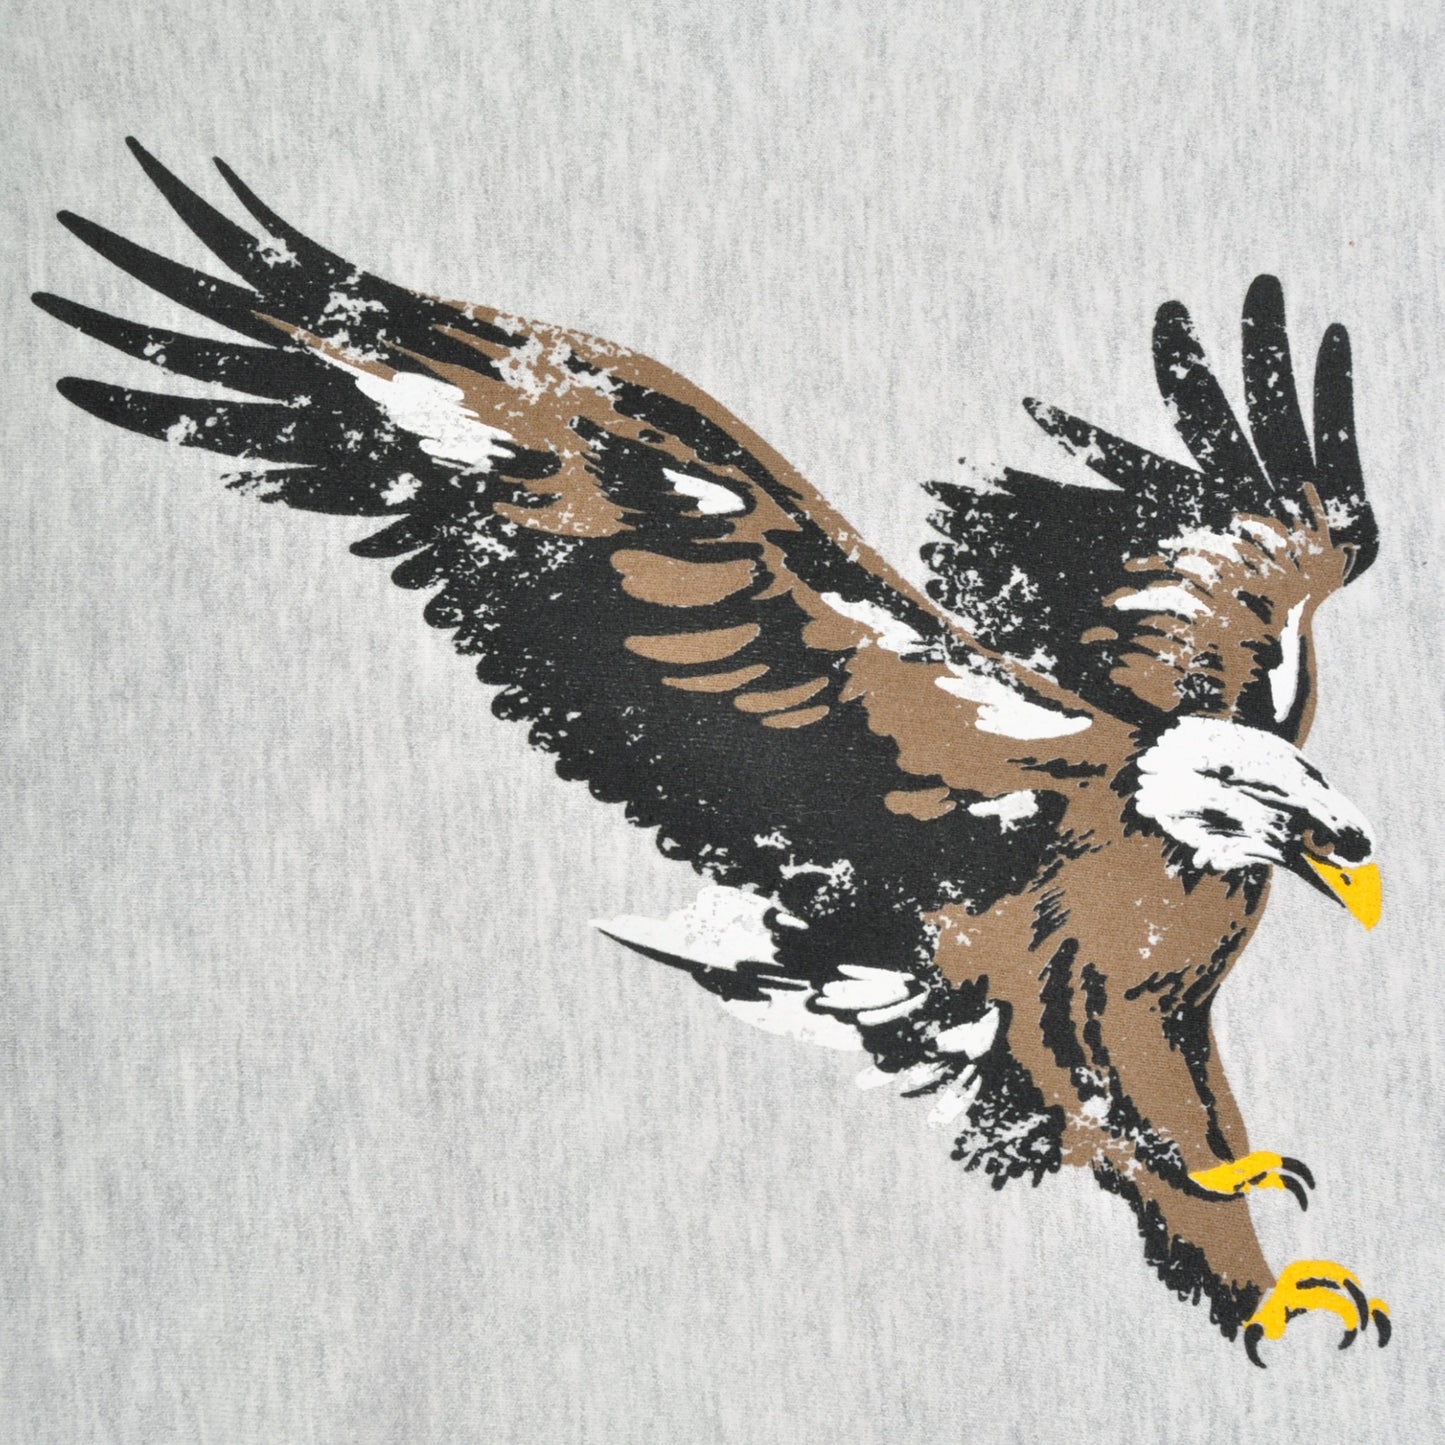 Eagle Printed Sweatshirt Grey